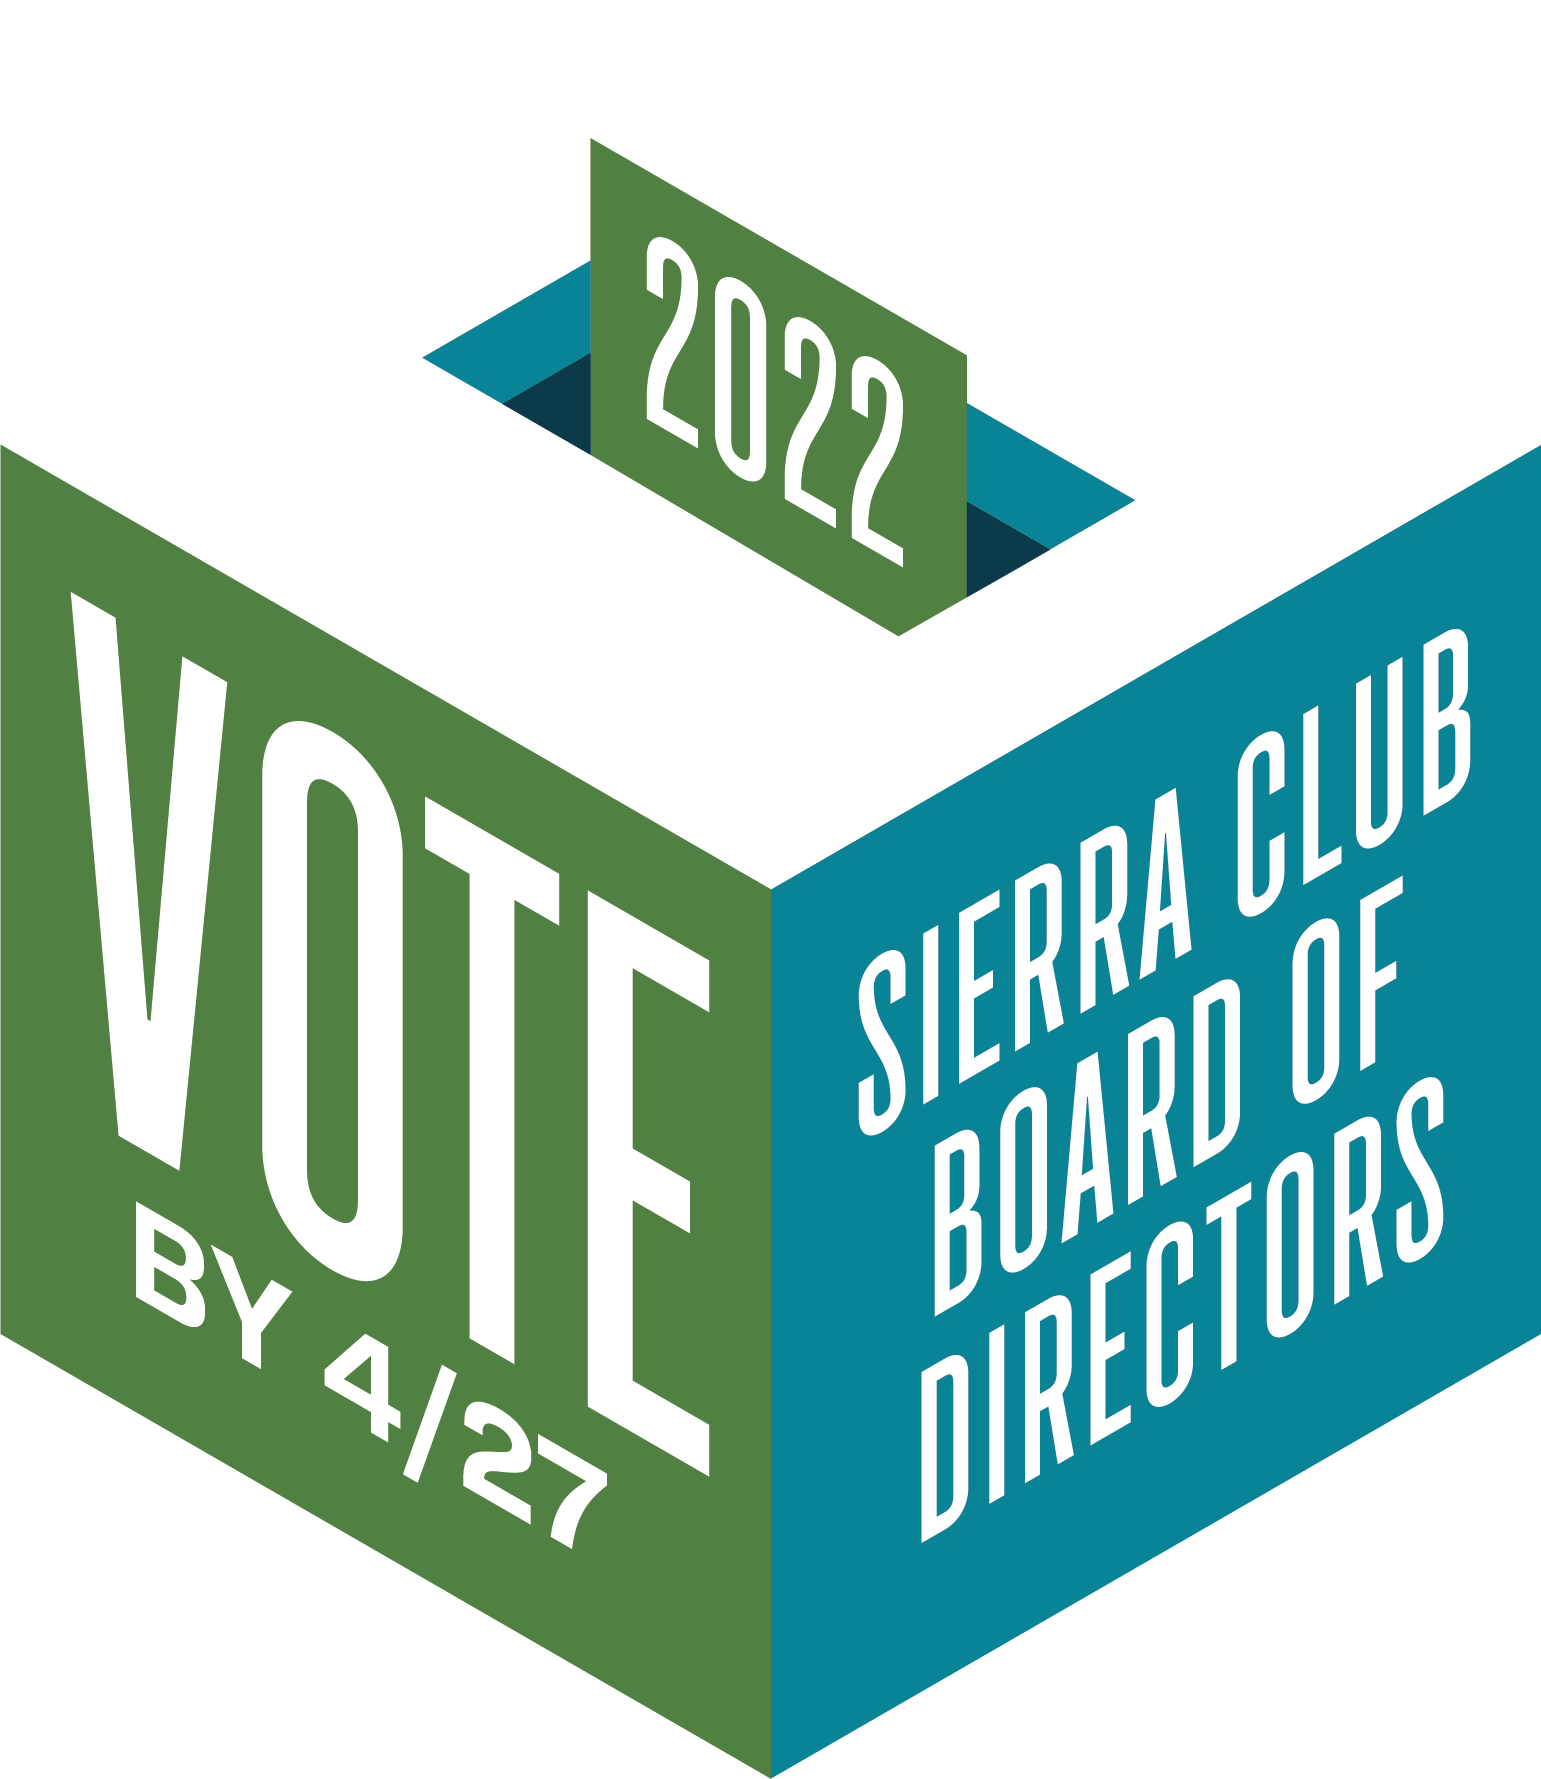 Board of Directors election